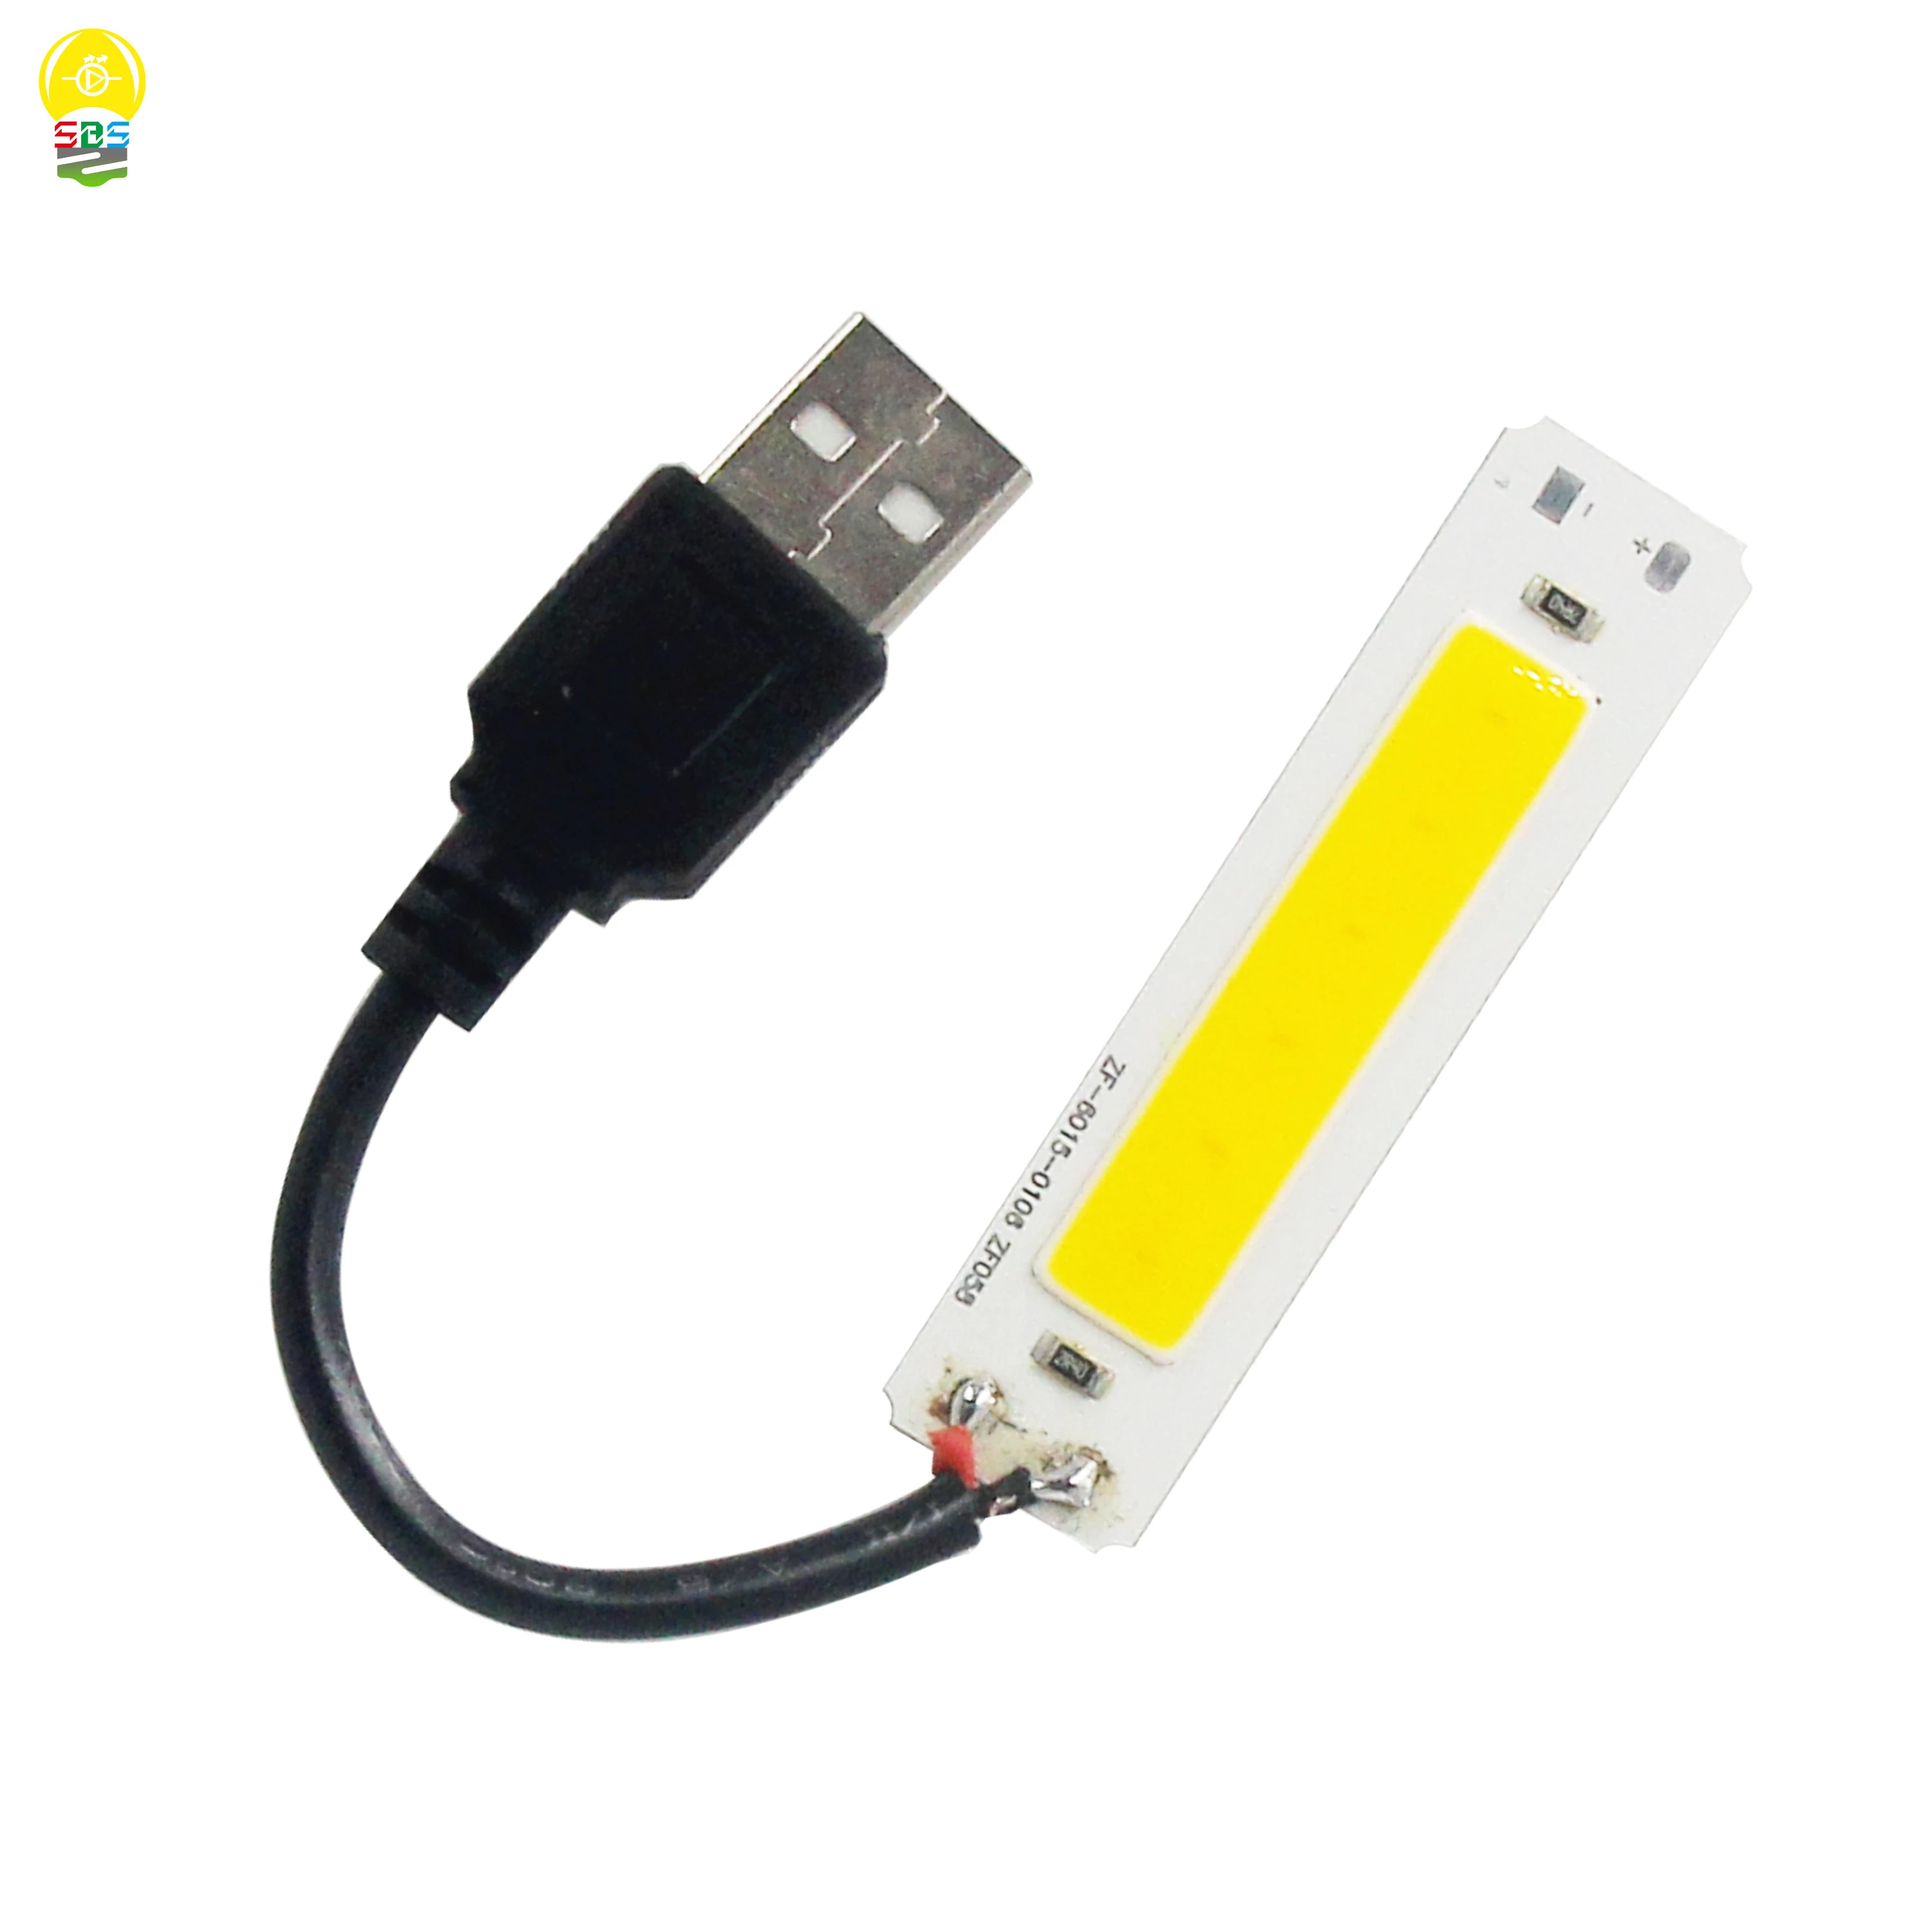 5V USB Powerful Light Lamp Stick Extendable Bright LED H3G3 